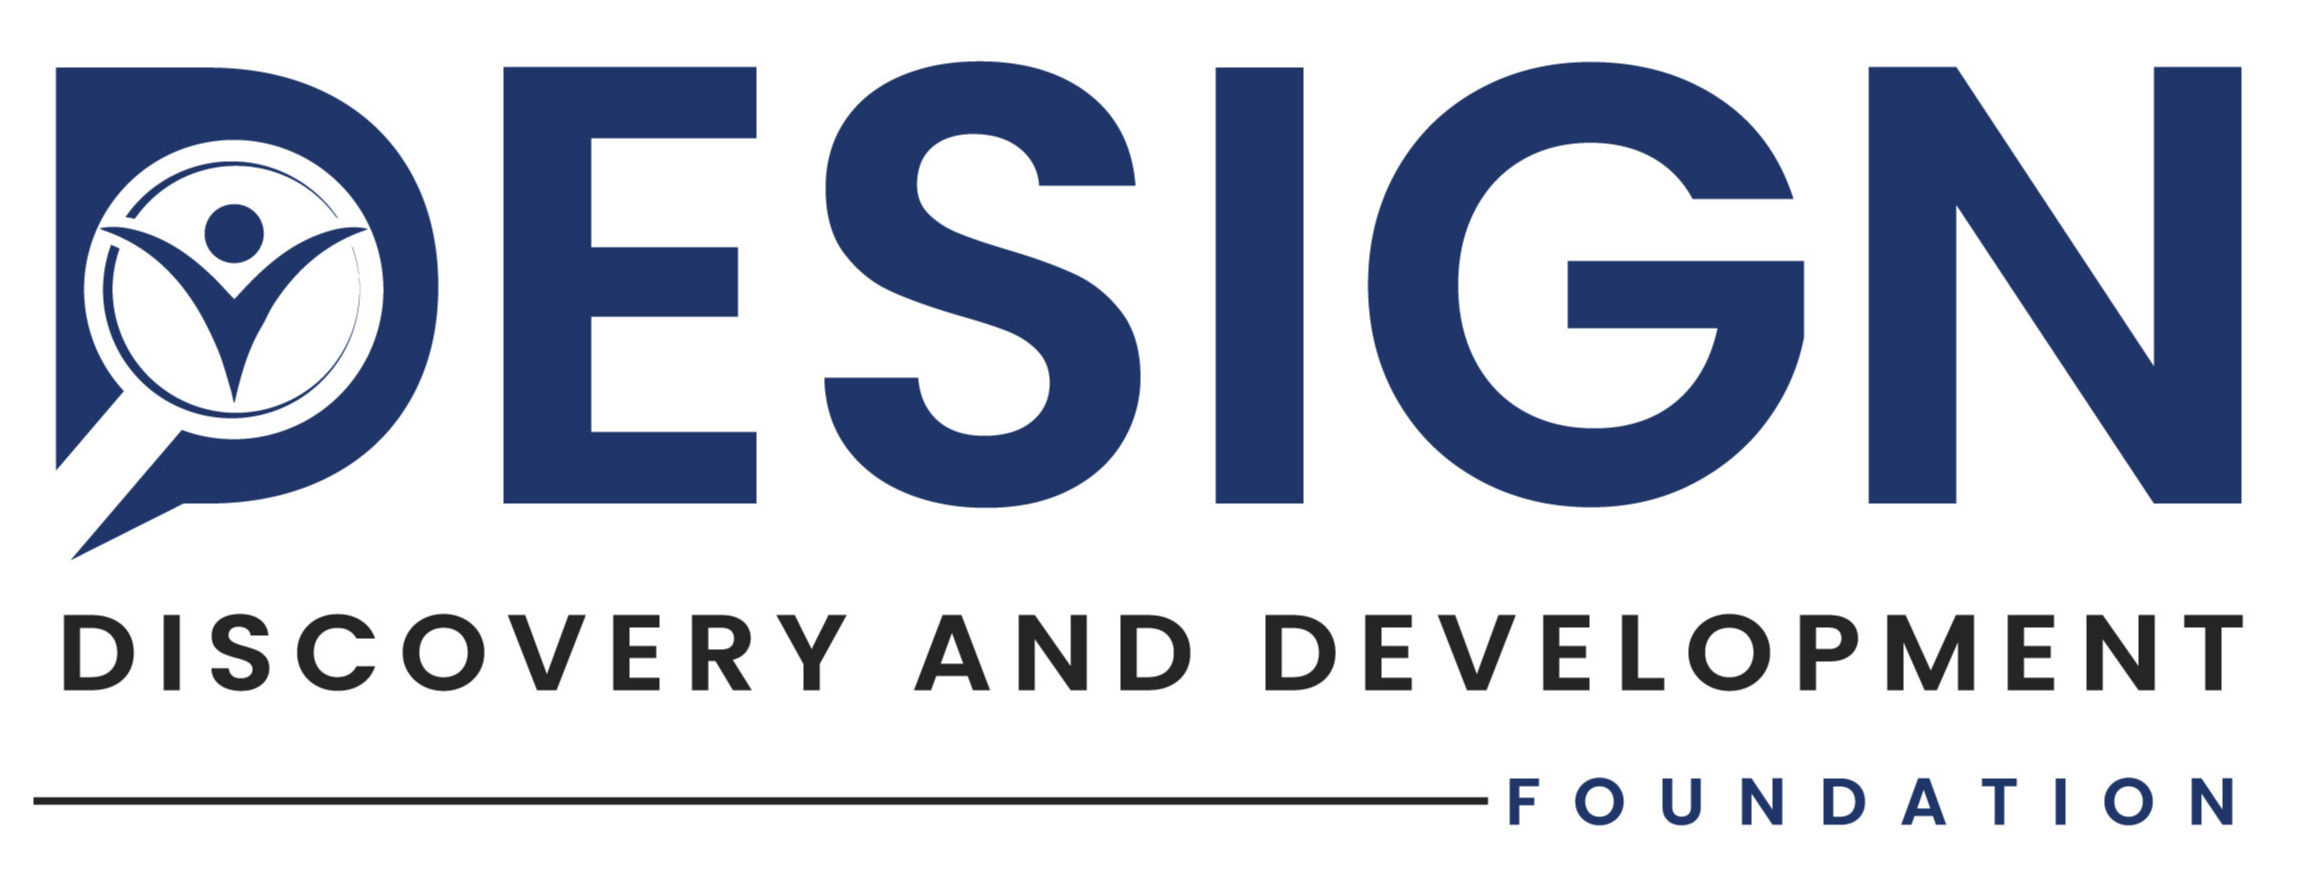 Design Discovery and Development Foundation logo